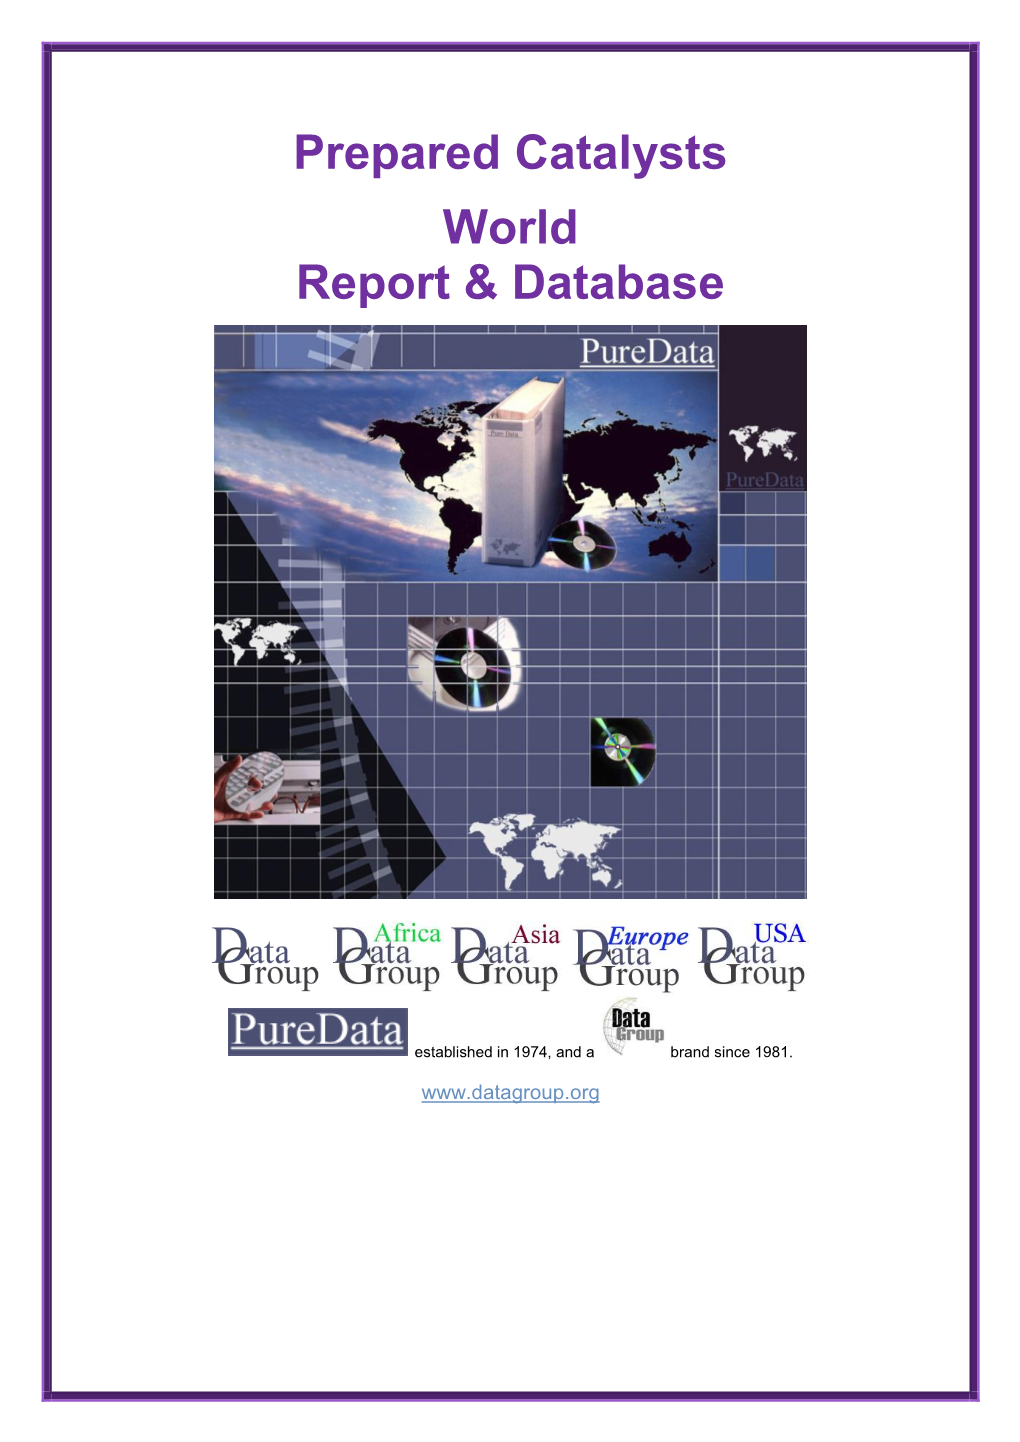 Prepared Catalysts World Report & Database